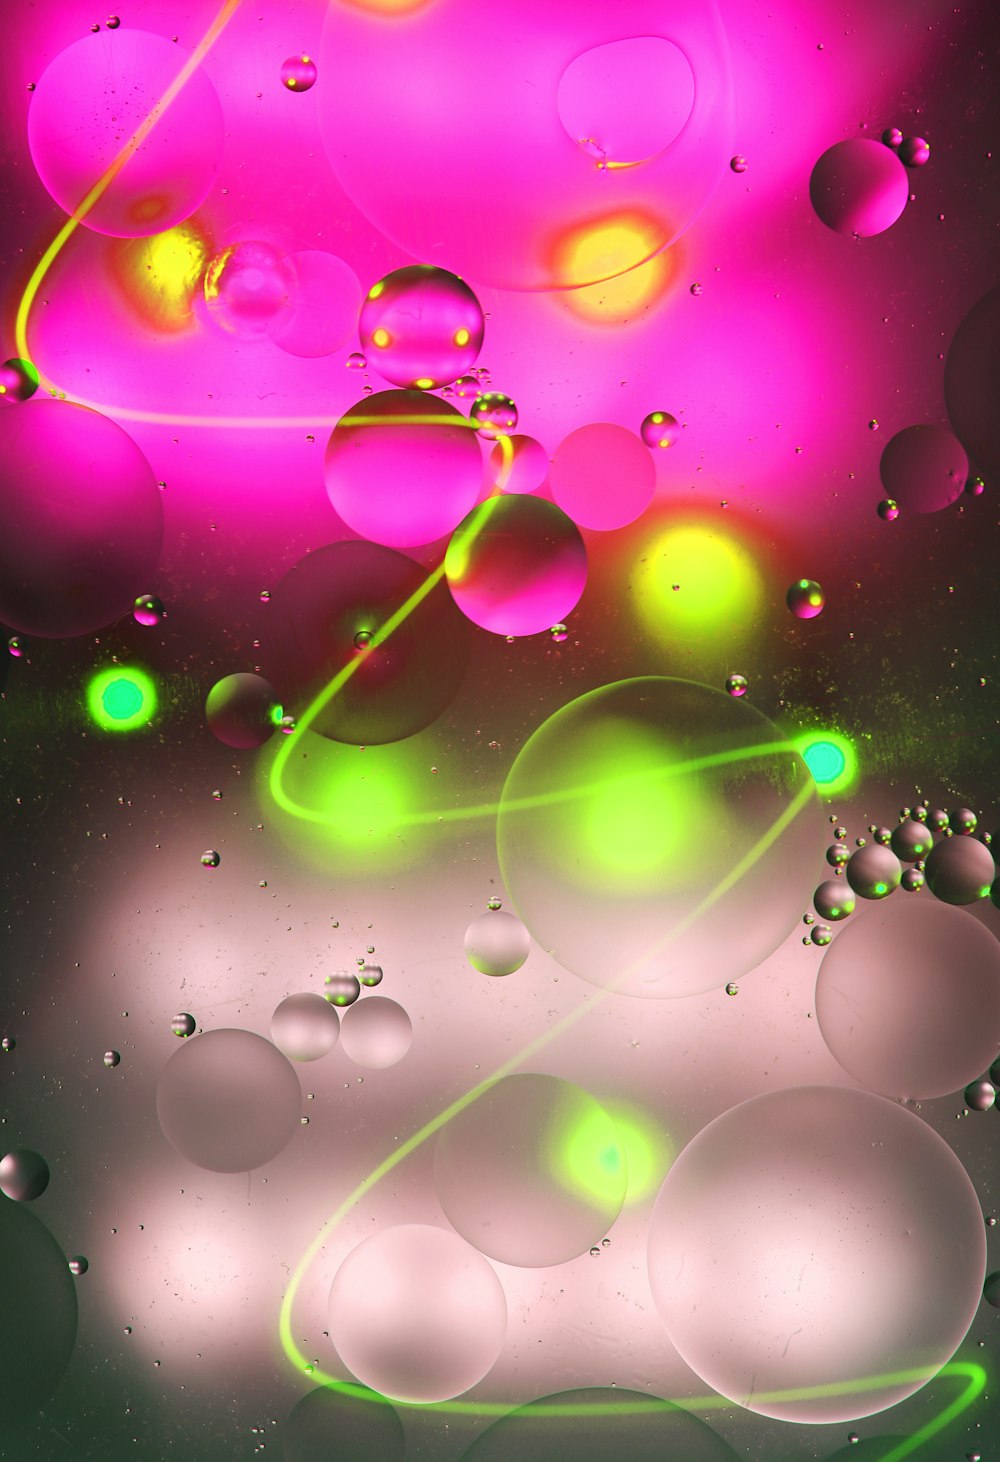 purple and green bubbles illustration